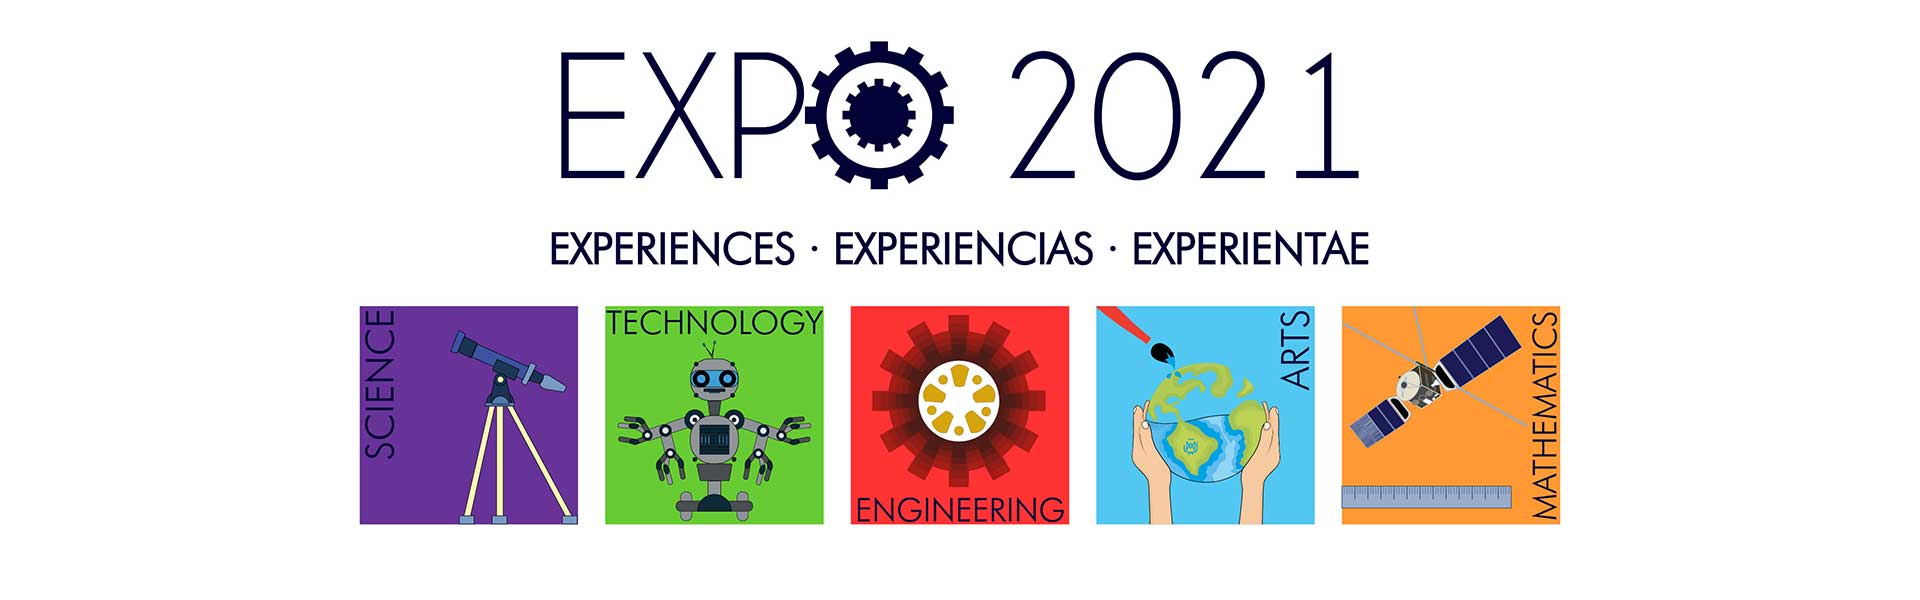 Expo 2021